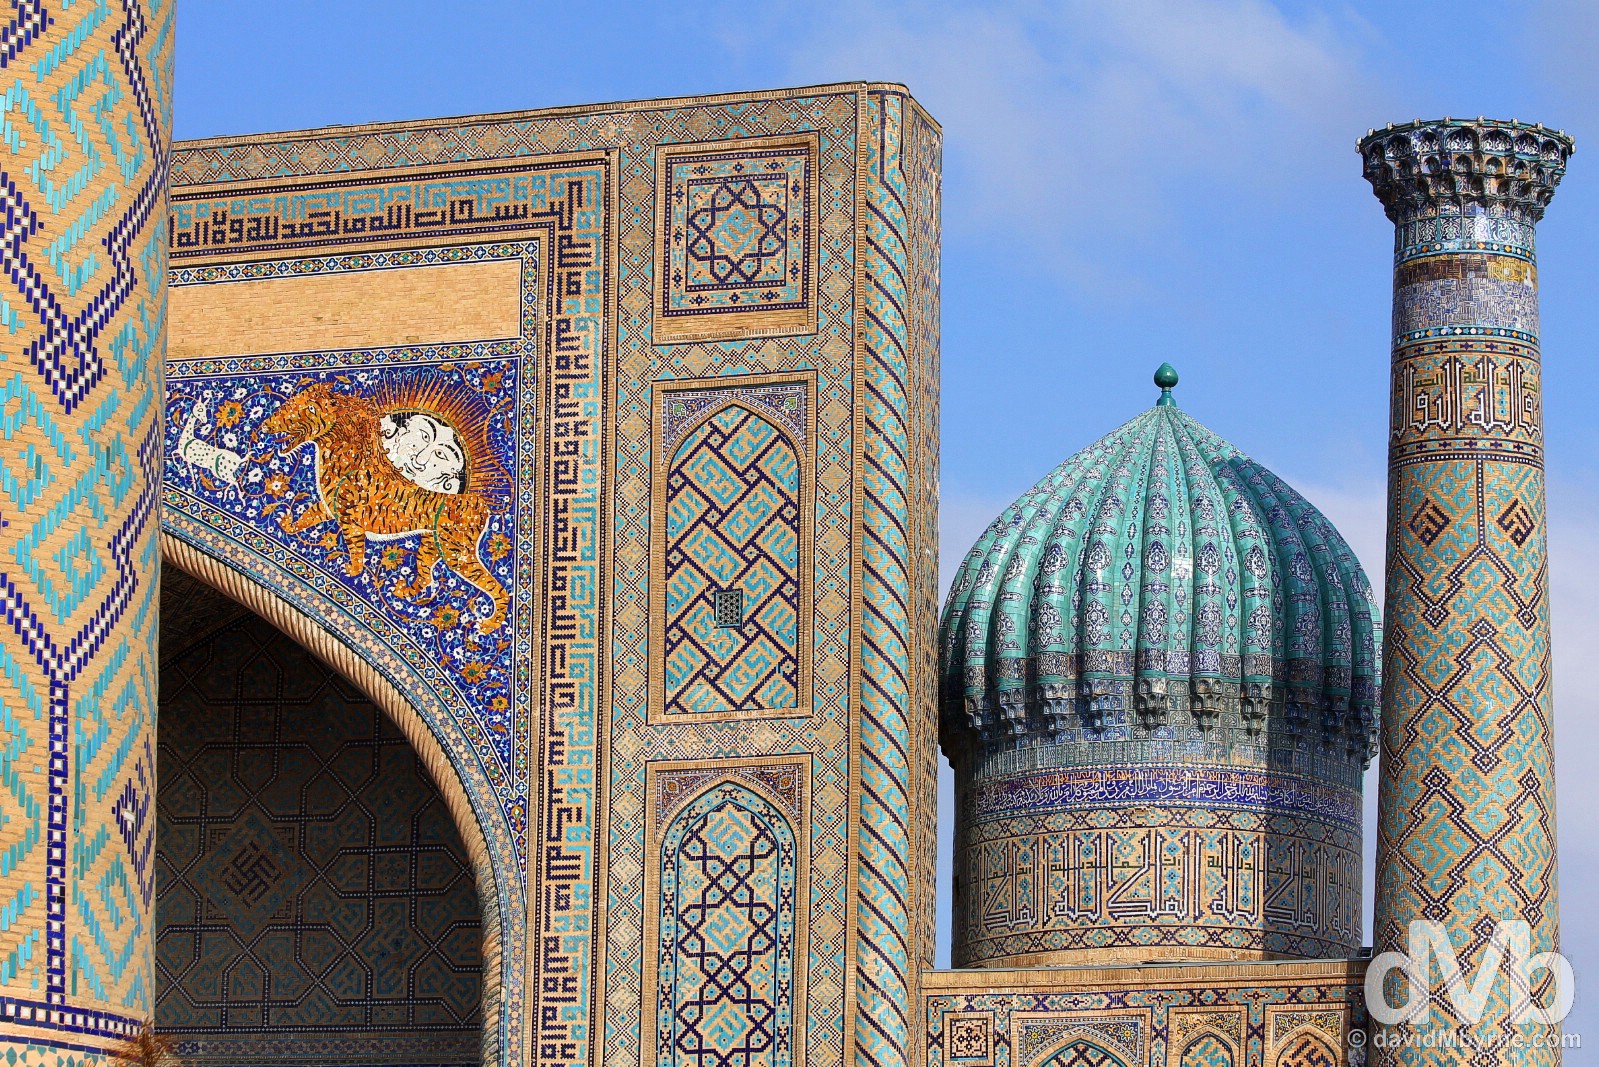 The Registan, Samarkand, Uzbekistan. March 8, 2015.